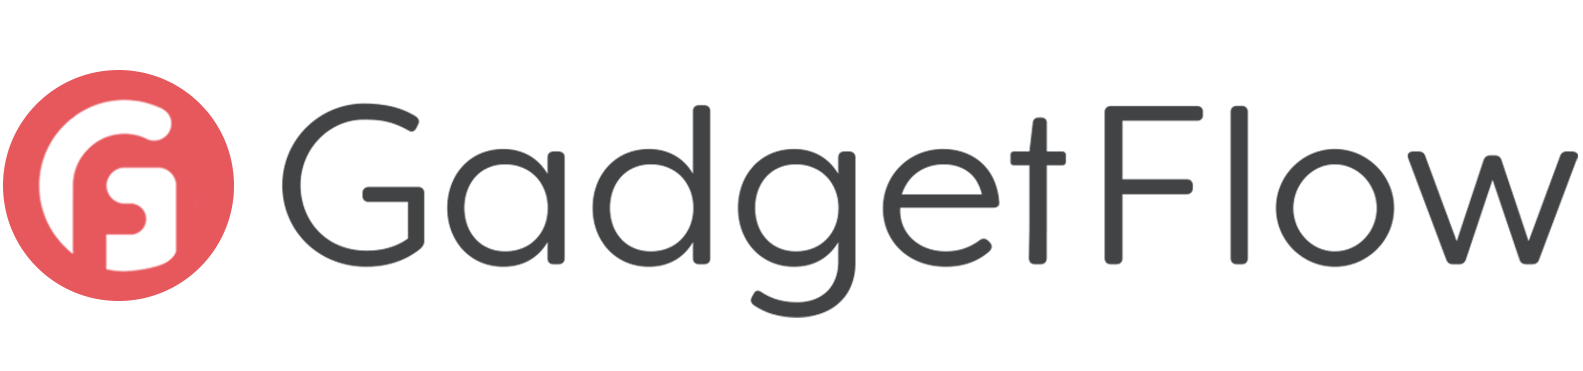 Gadget-Flow-Logo-Main2 - CITYFRAMES